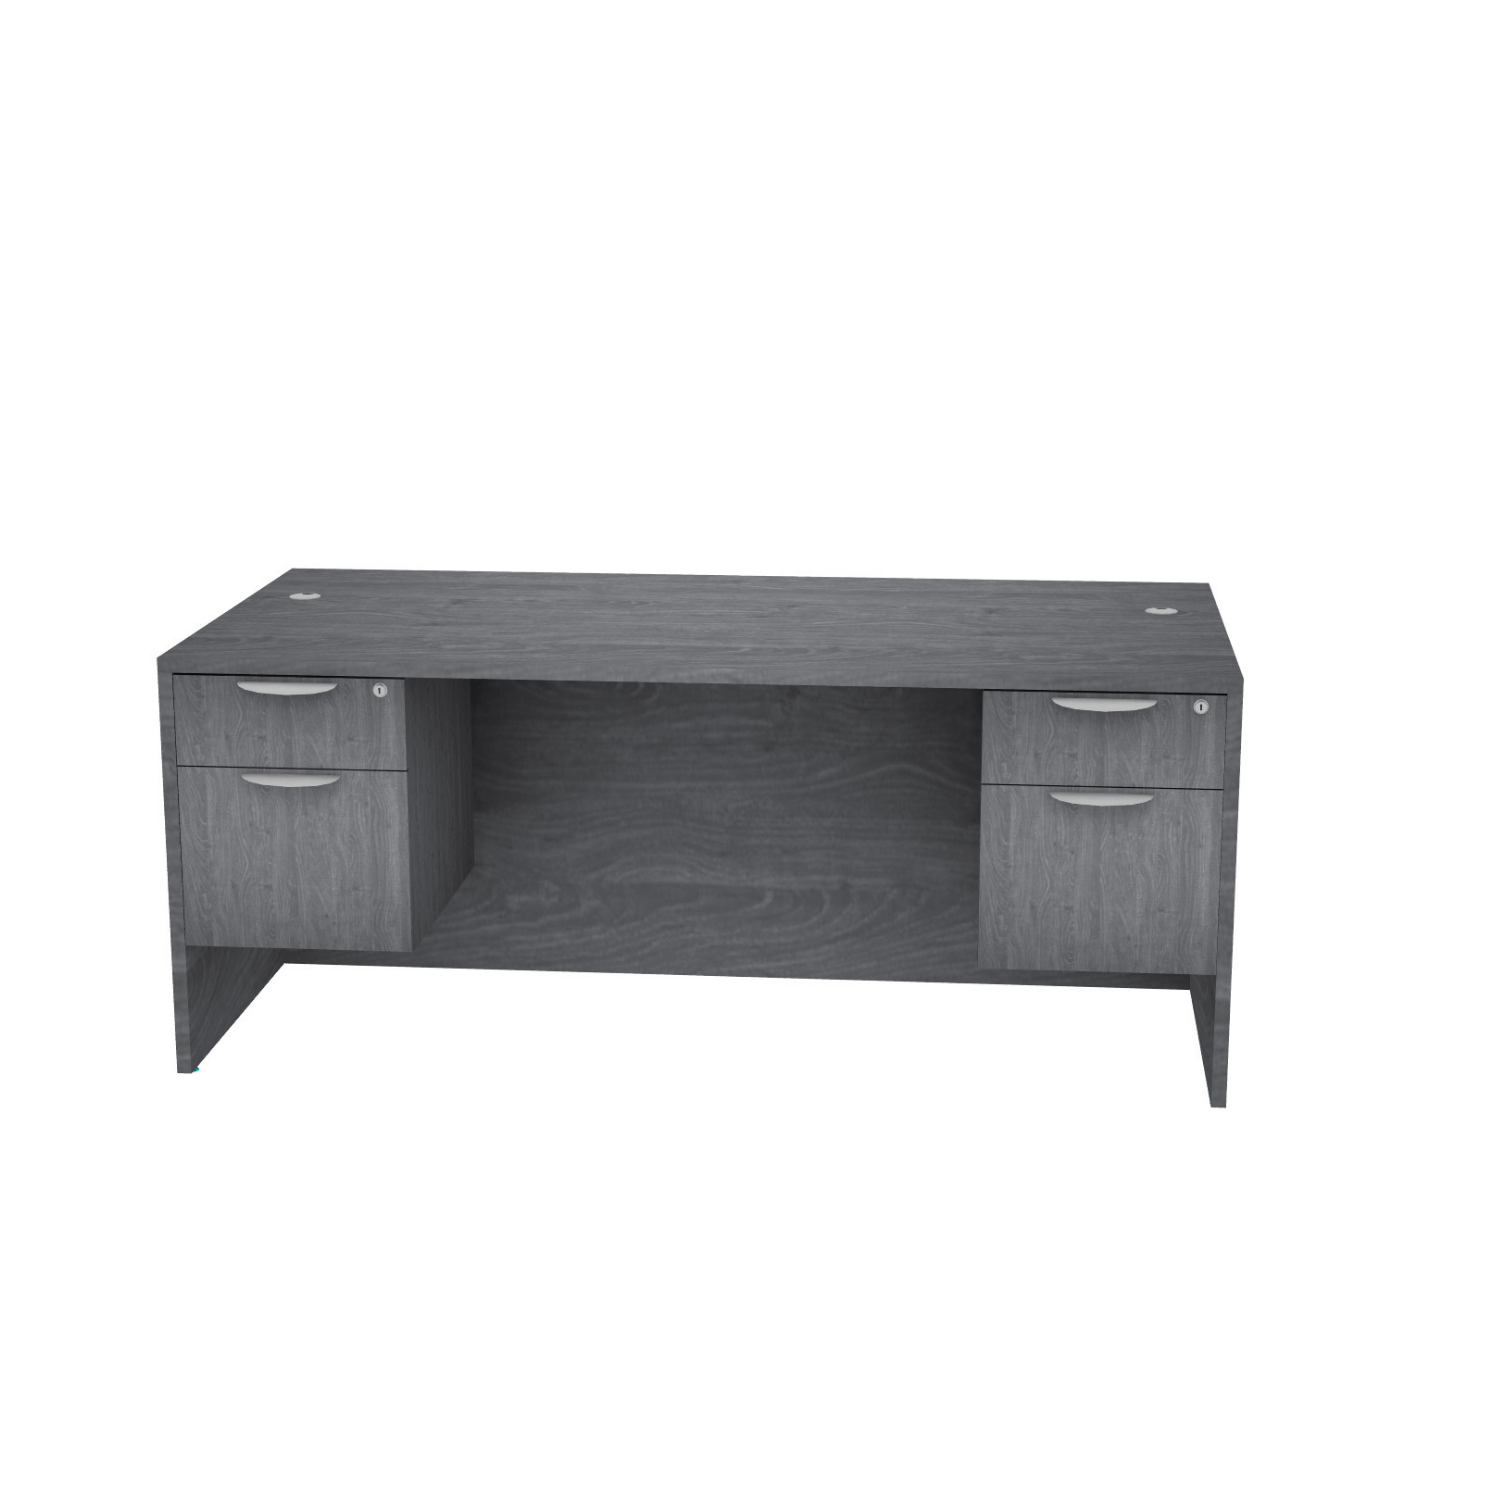 30x60 Gray Desk Double Pedestal by CavilUSA